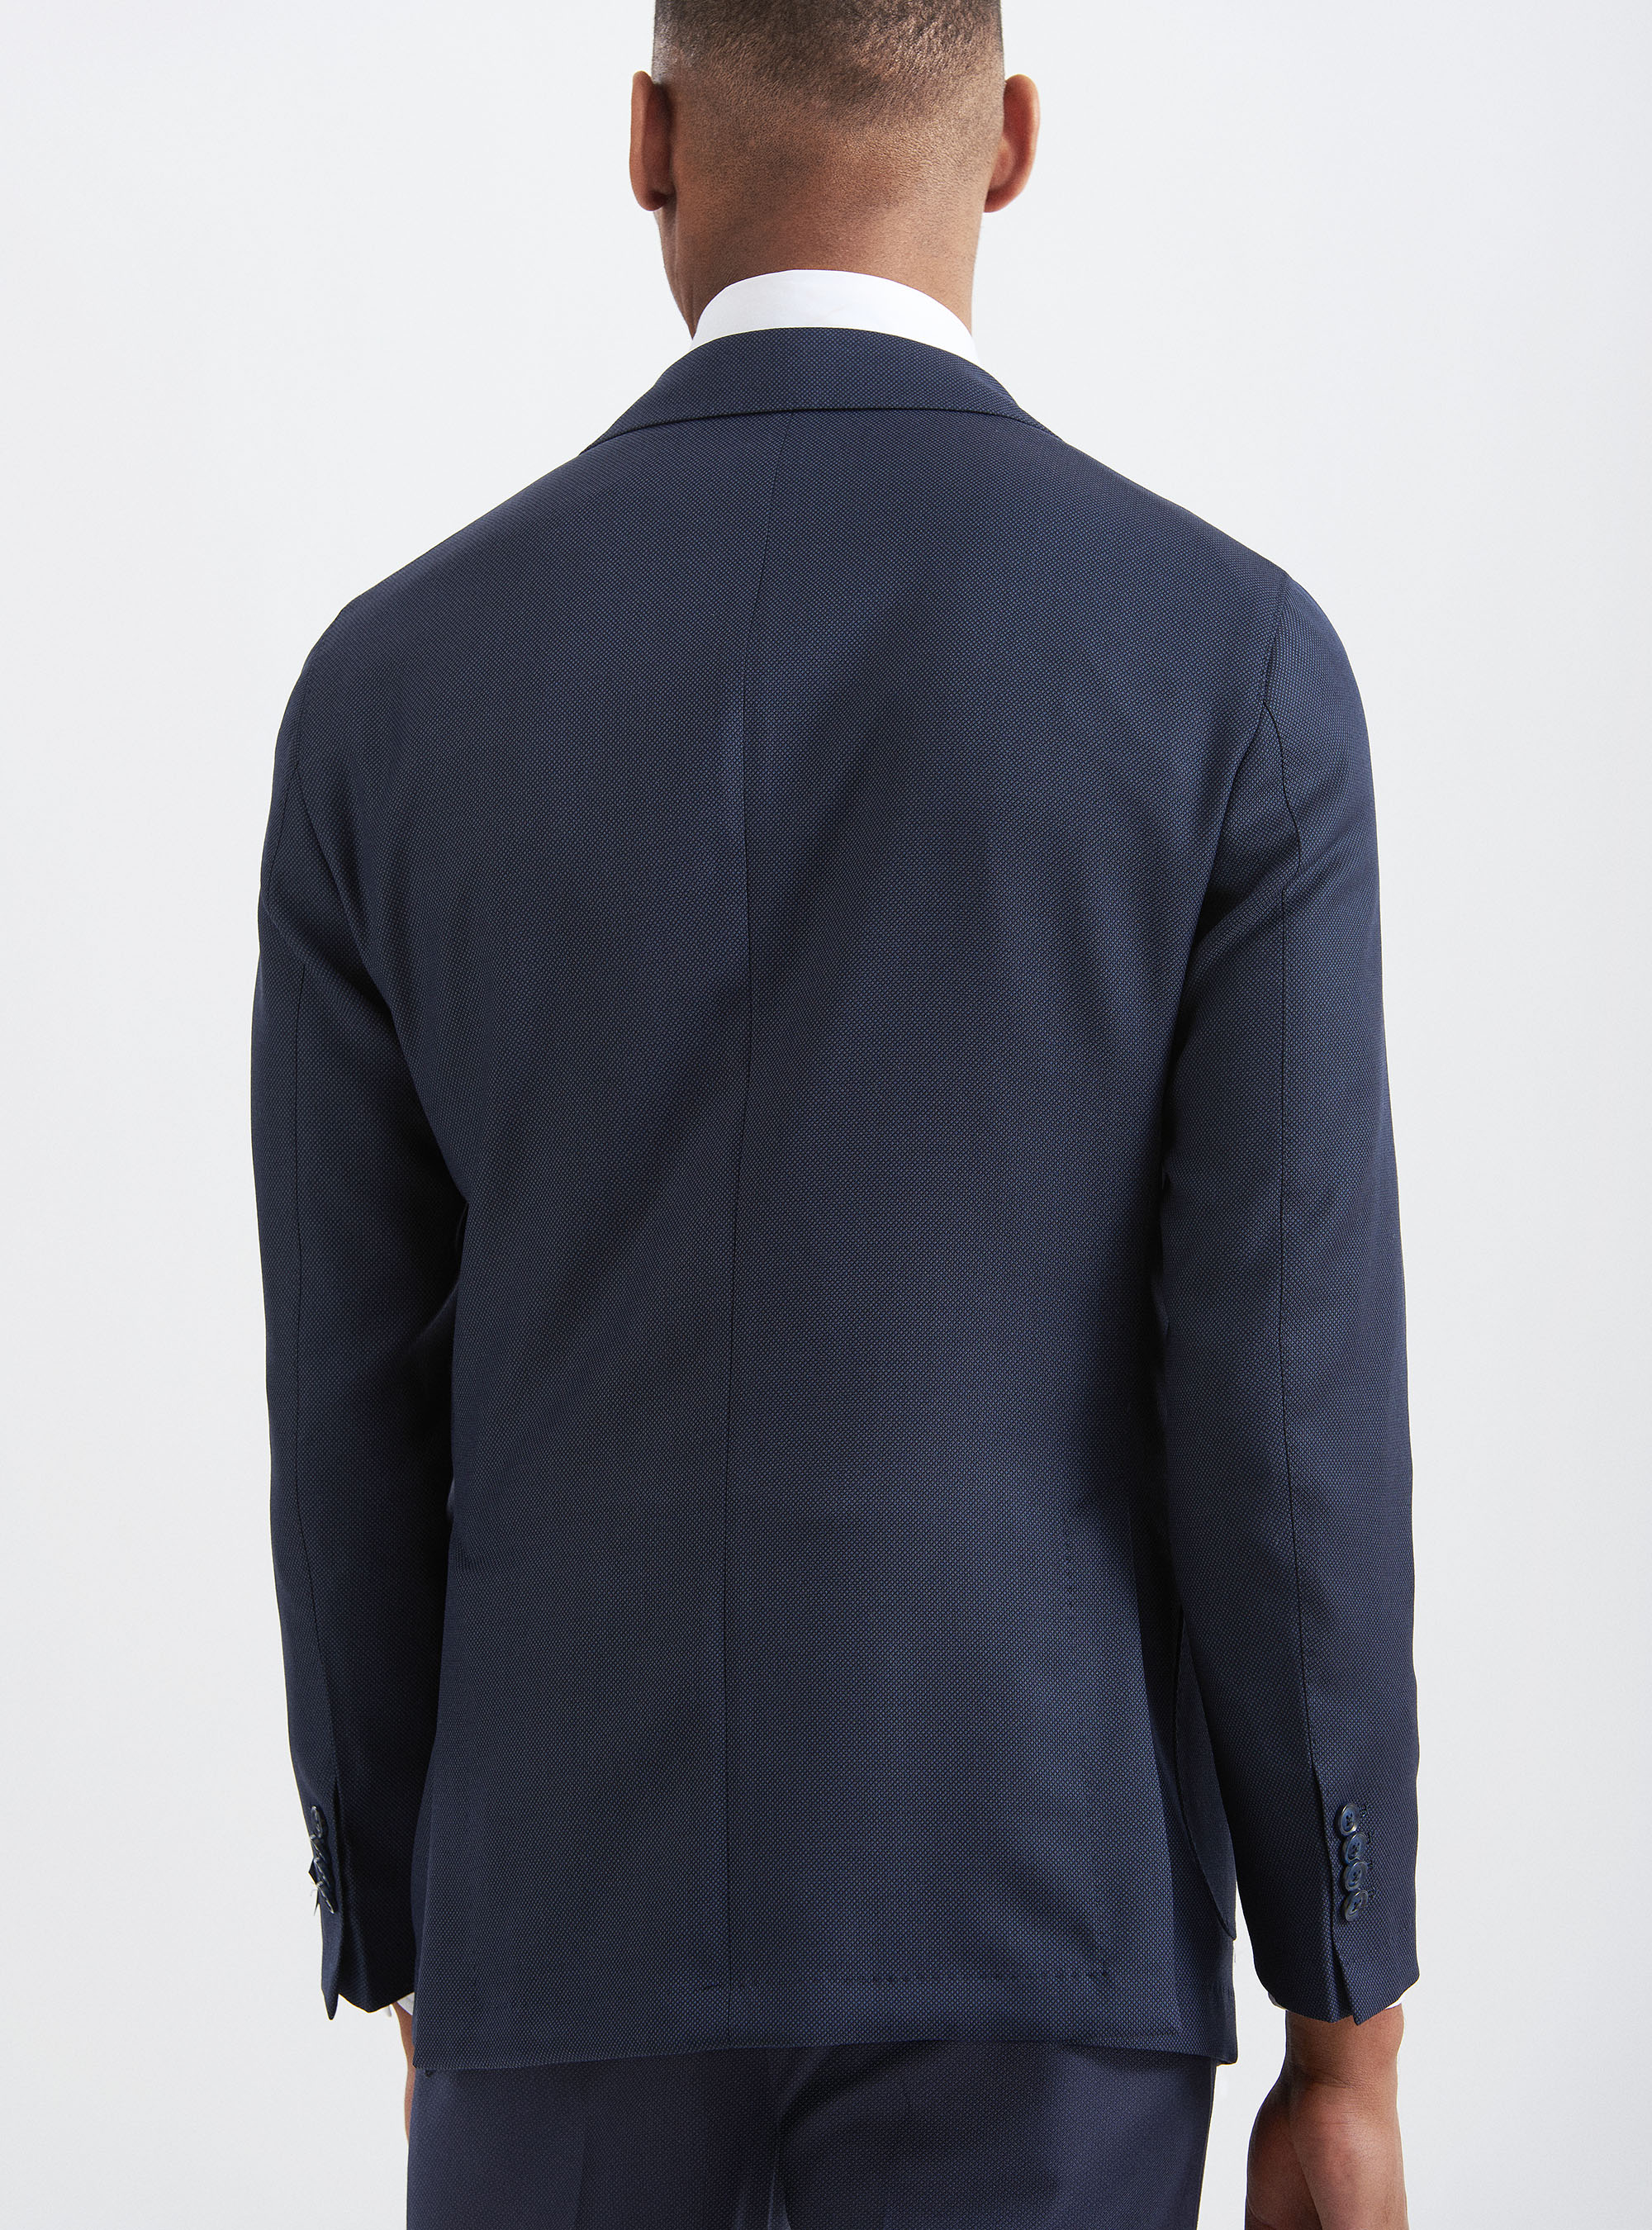 Suit blazer in 110's superfine partridge eye wool